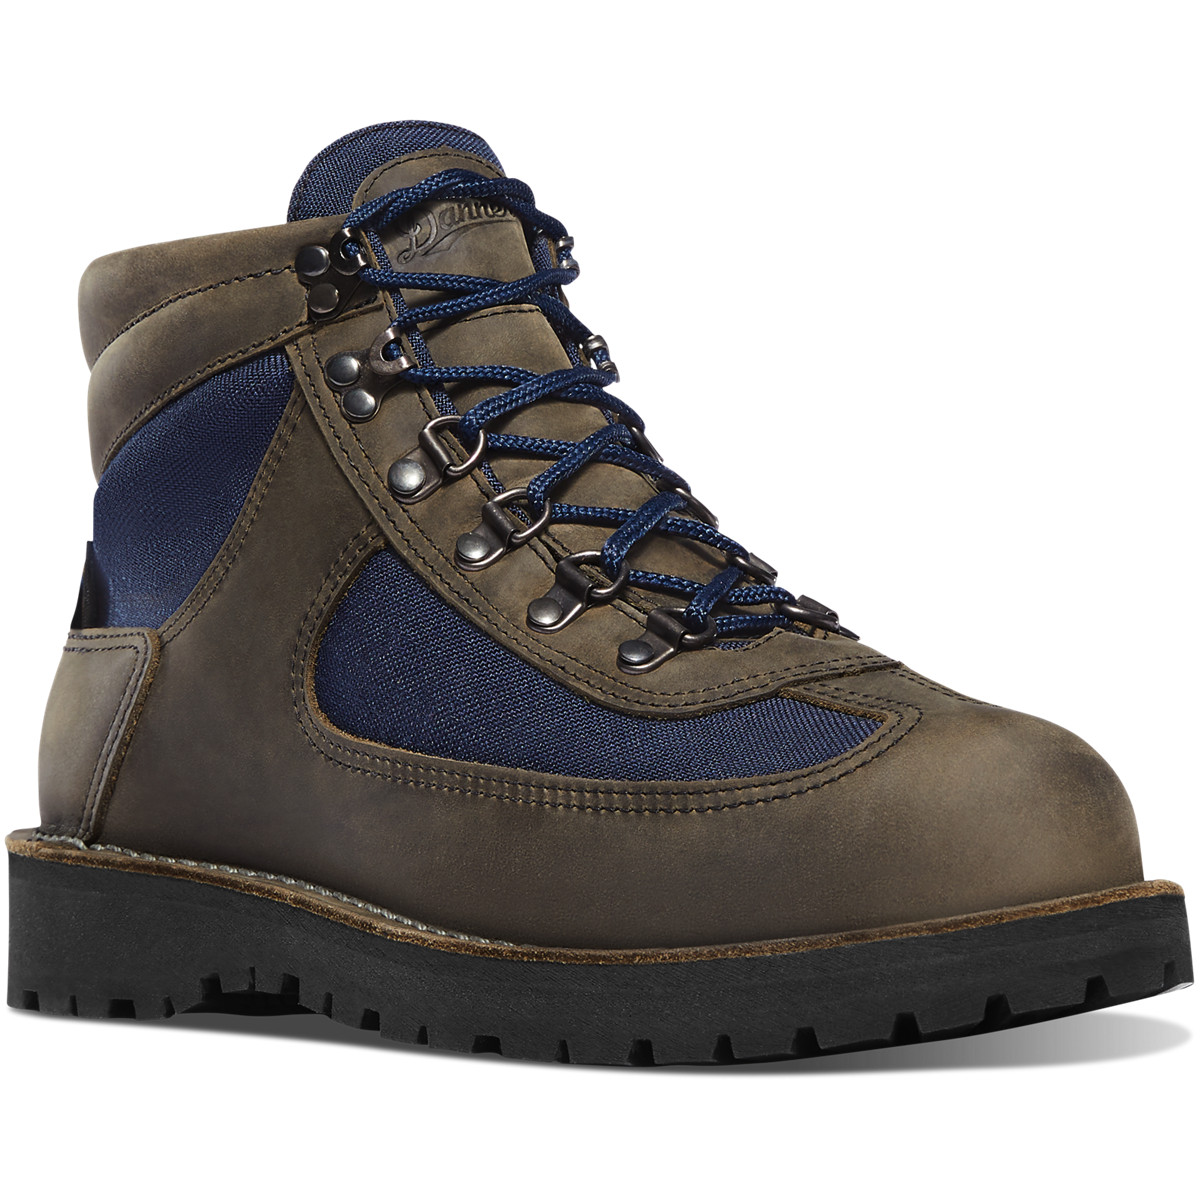 Danner Mens Feather Light Hiking Boots Olive/Blue - IZT965234